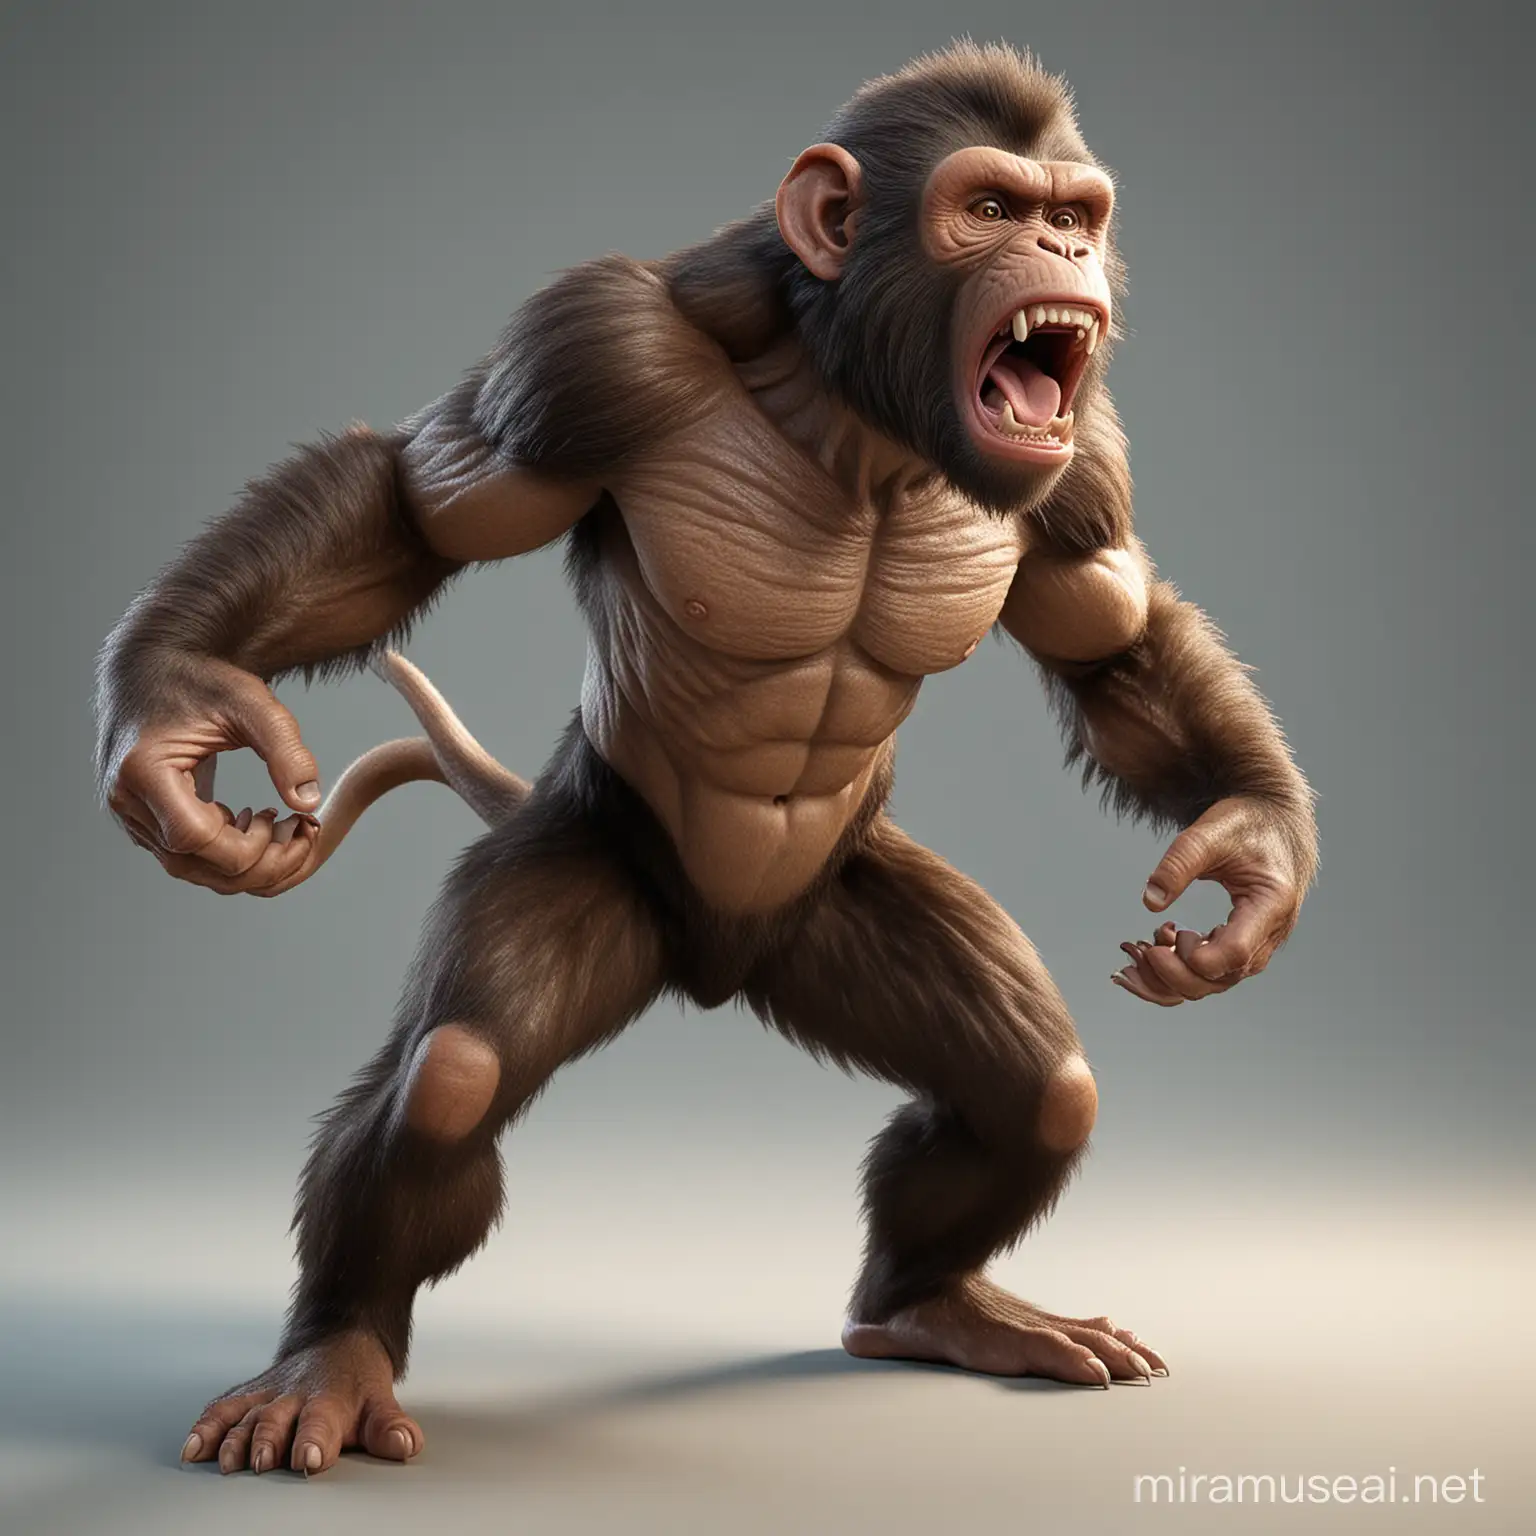  super muscular monkey growling
 image 3d